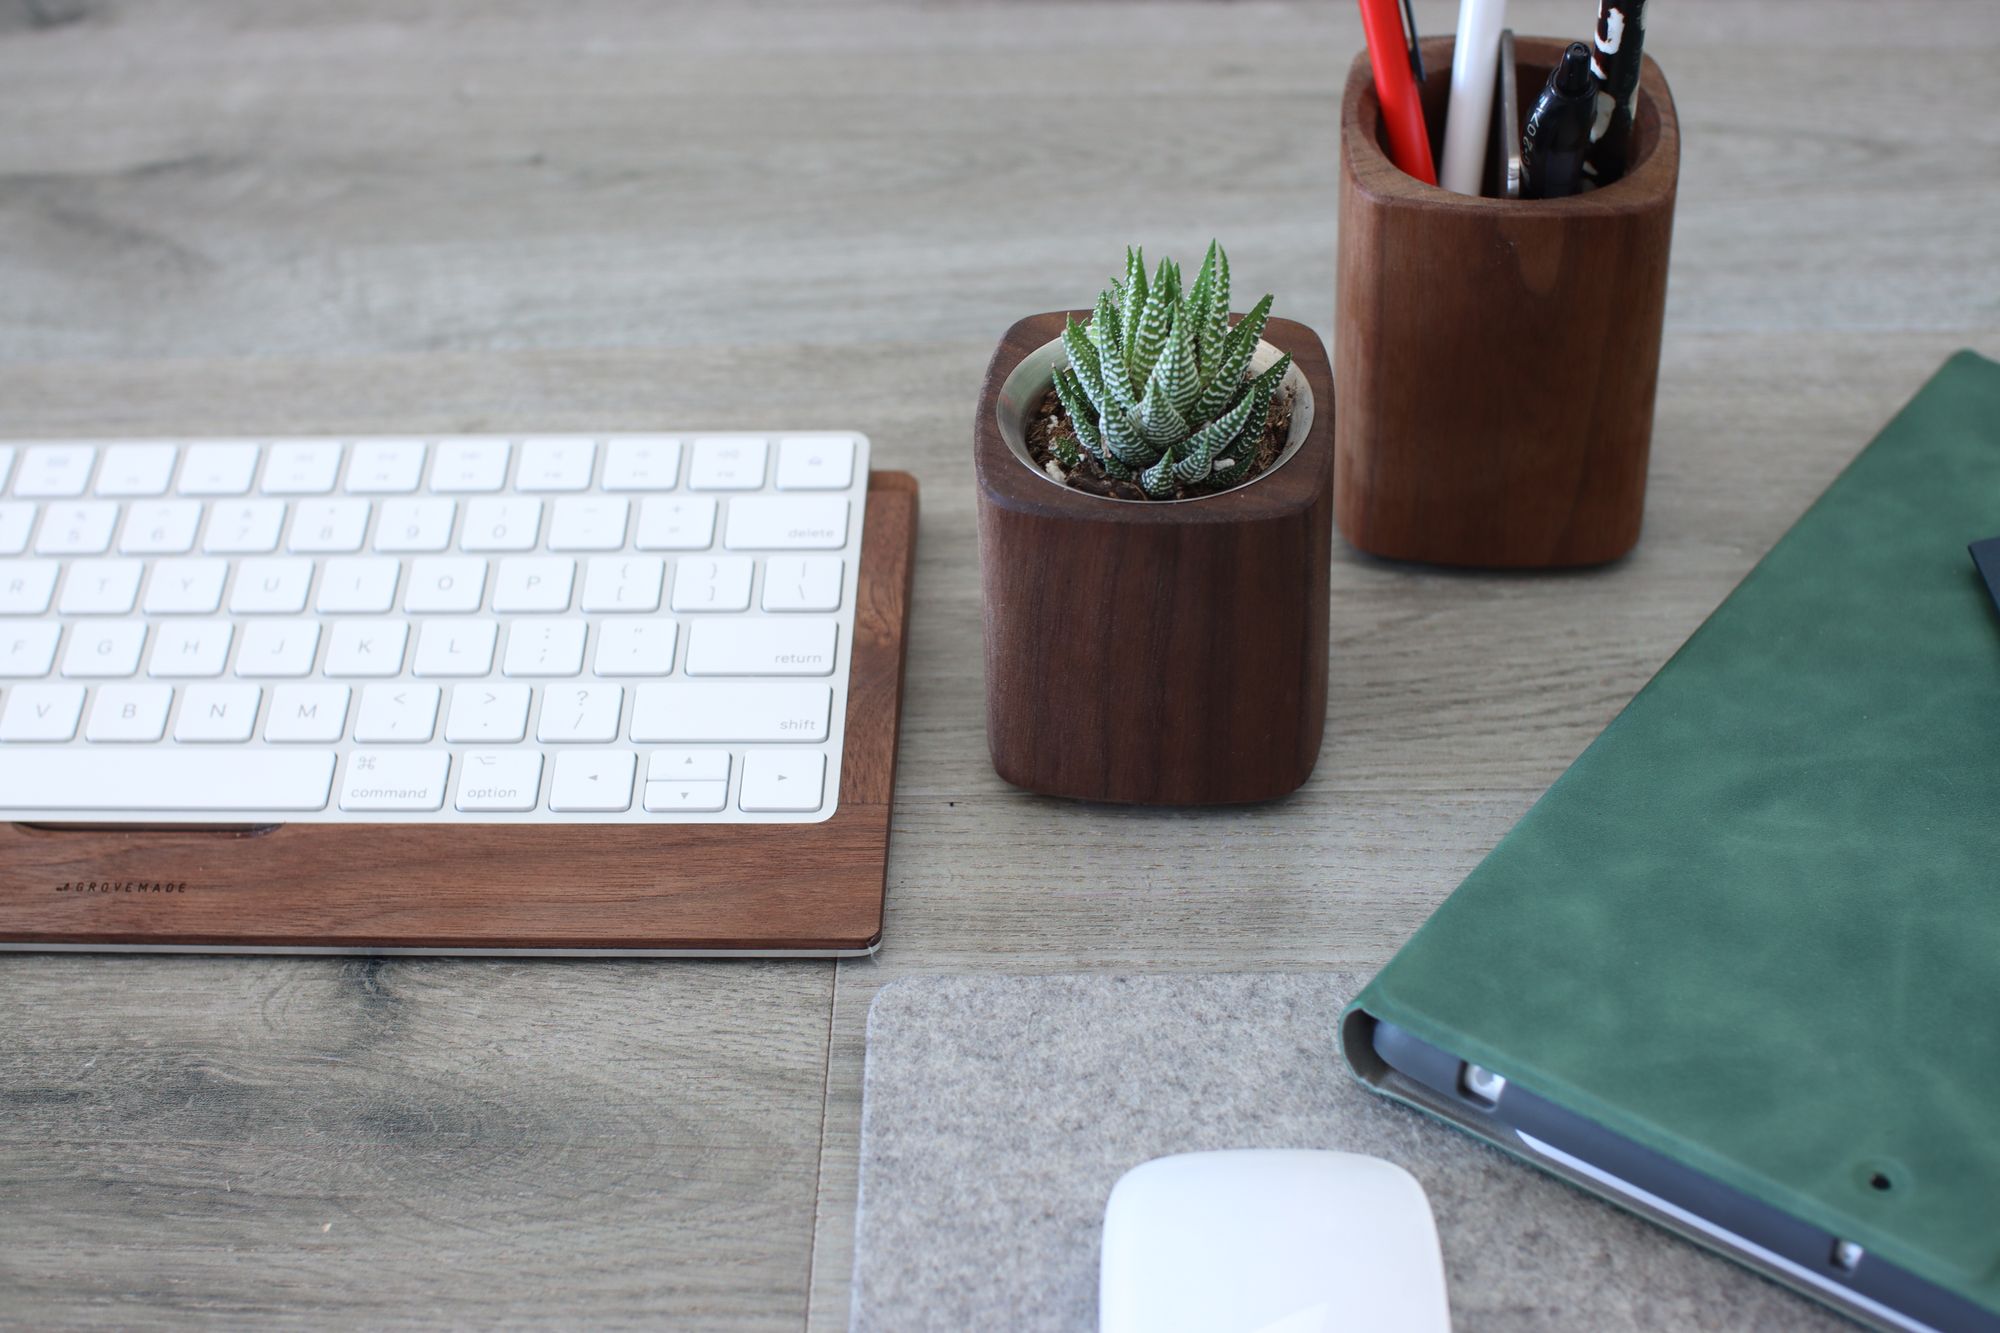 Walnut Apple keyboard tray, planter and pen holder